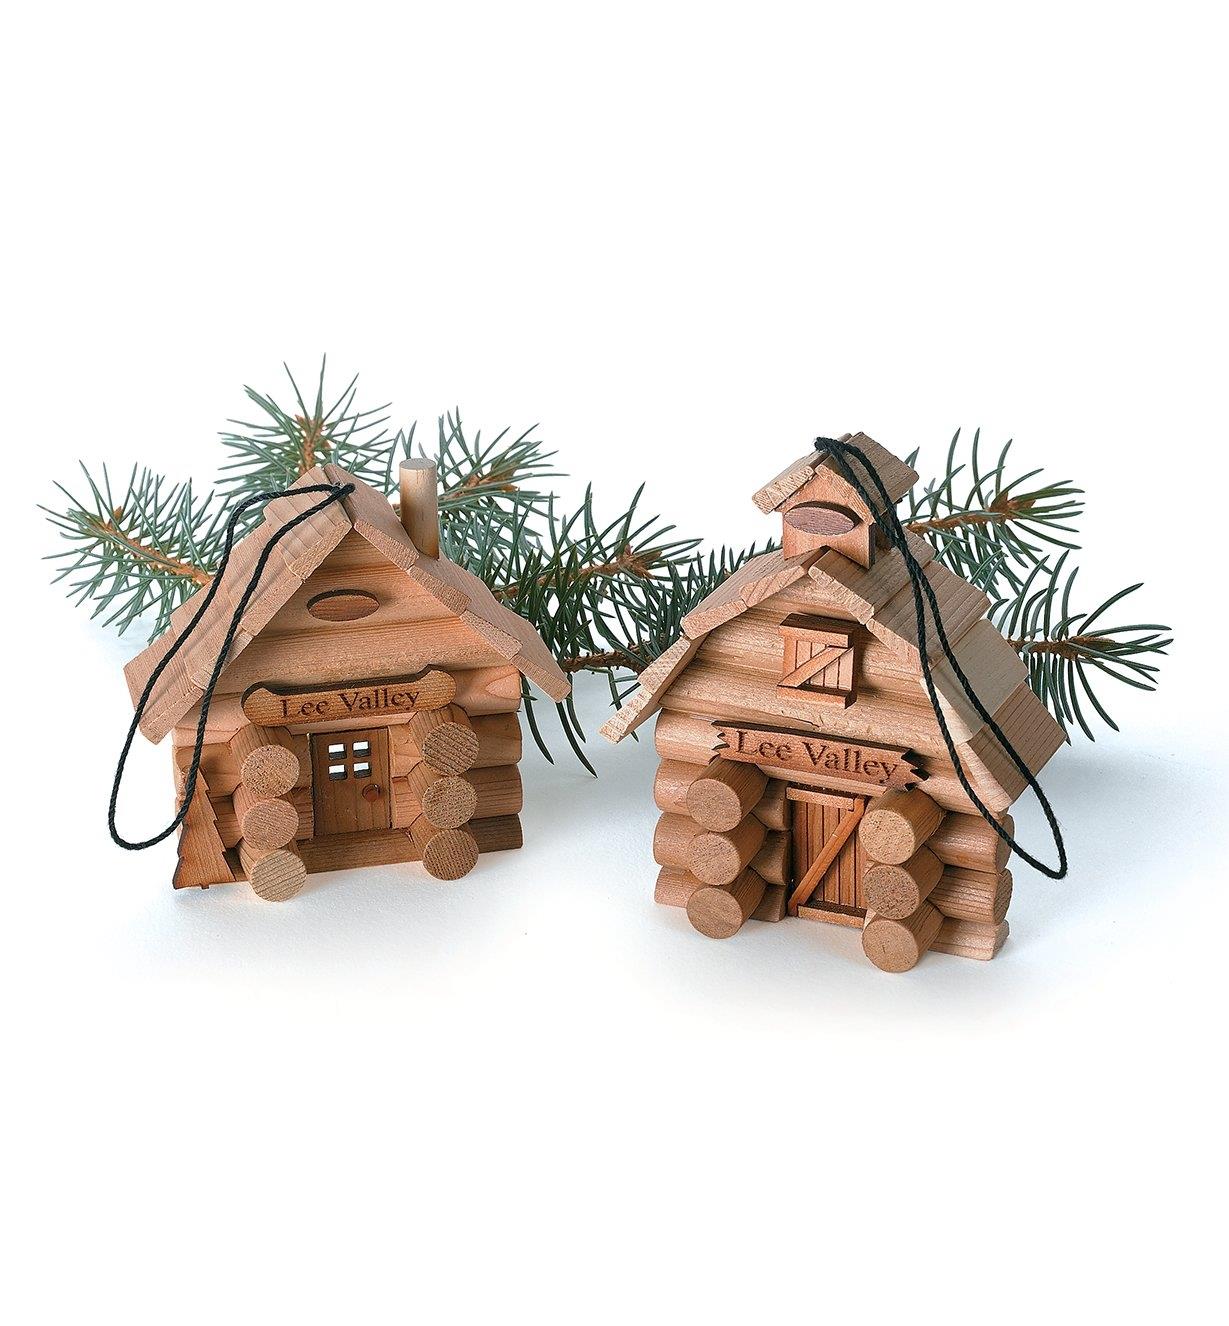 Log Cabin and Barn Ornament Kits assembled